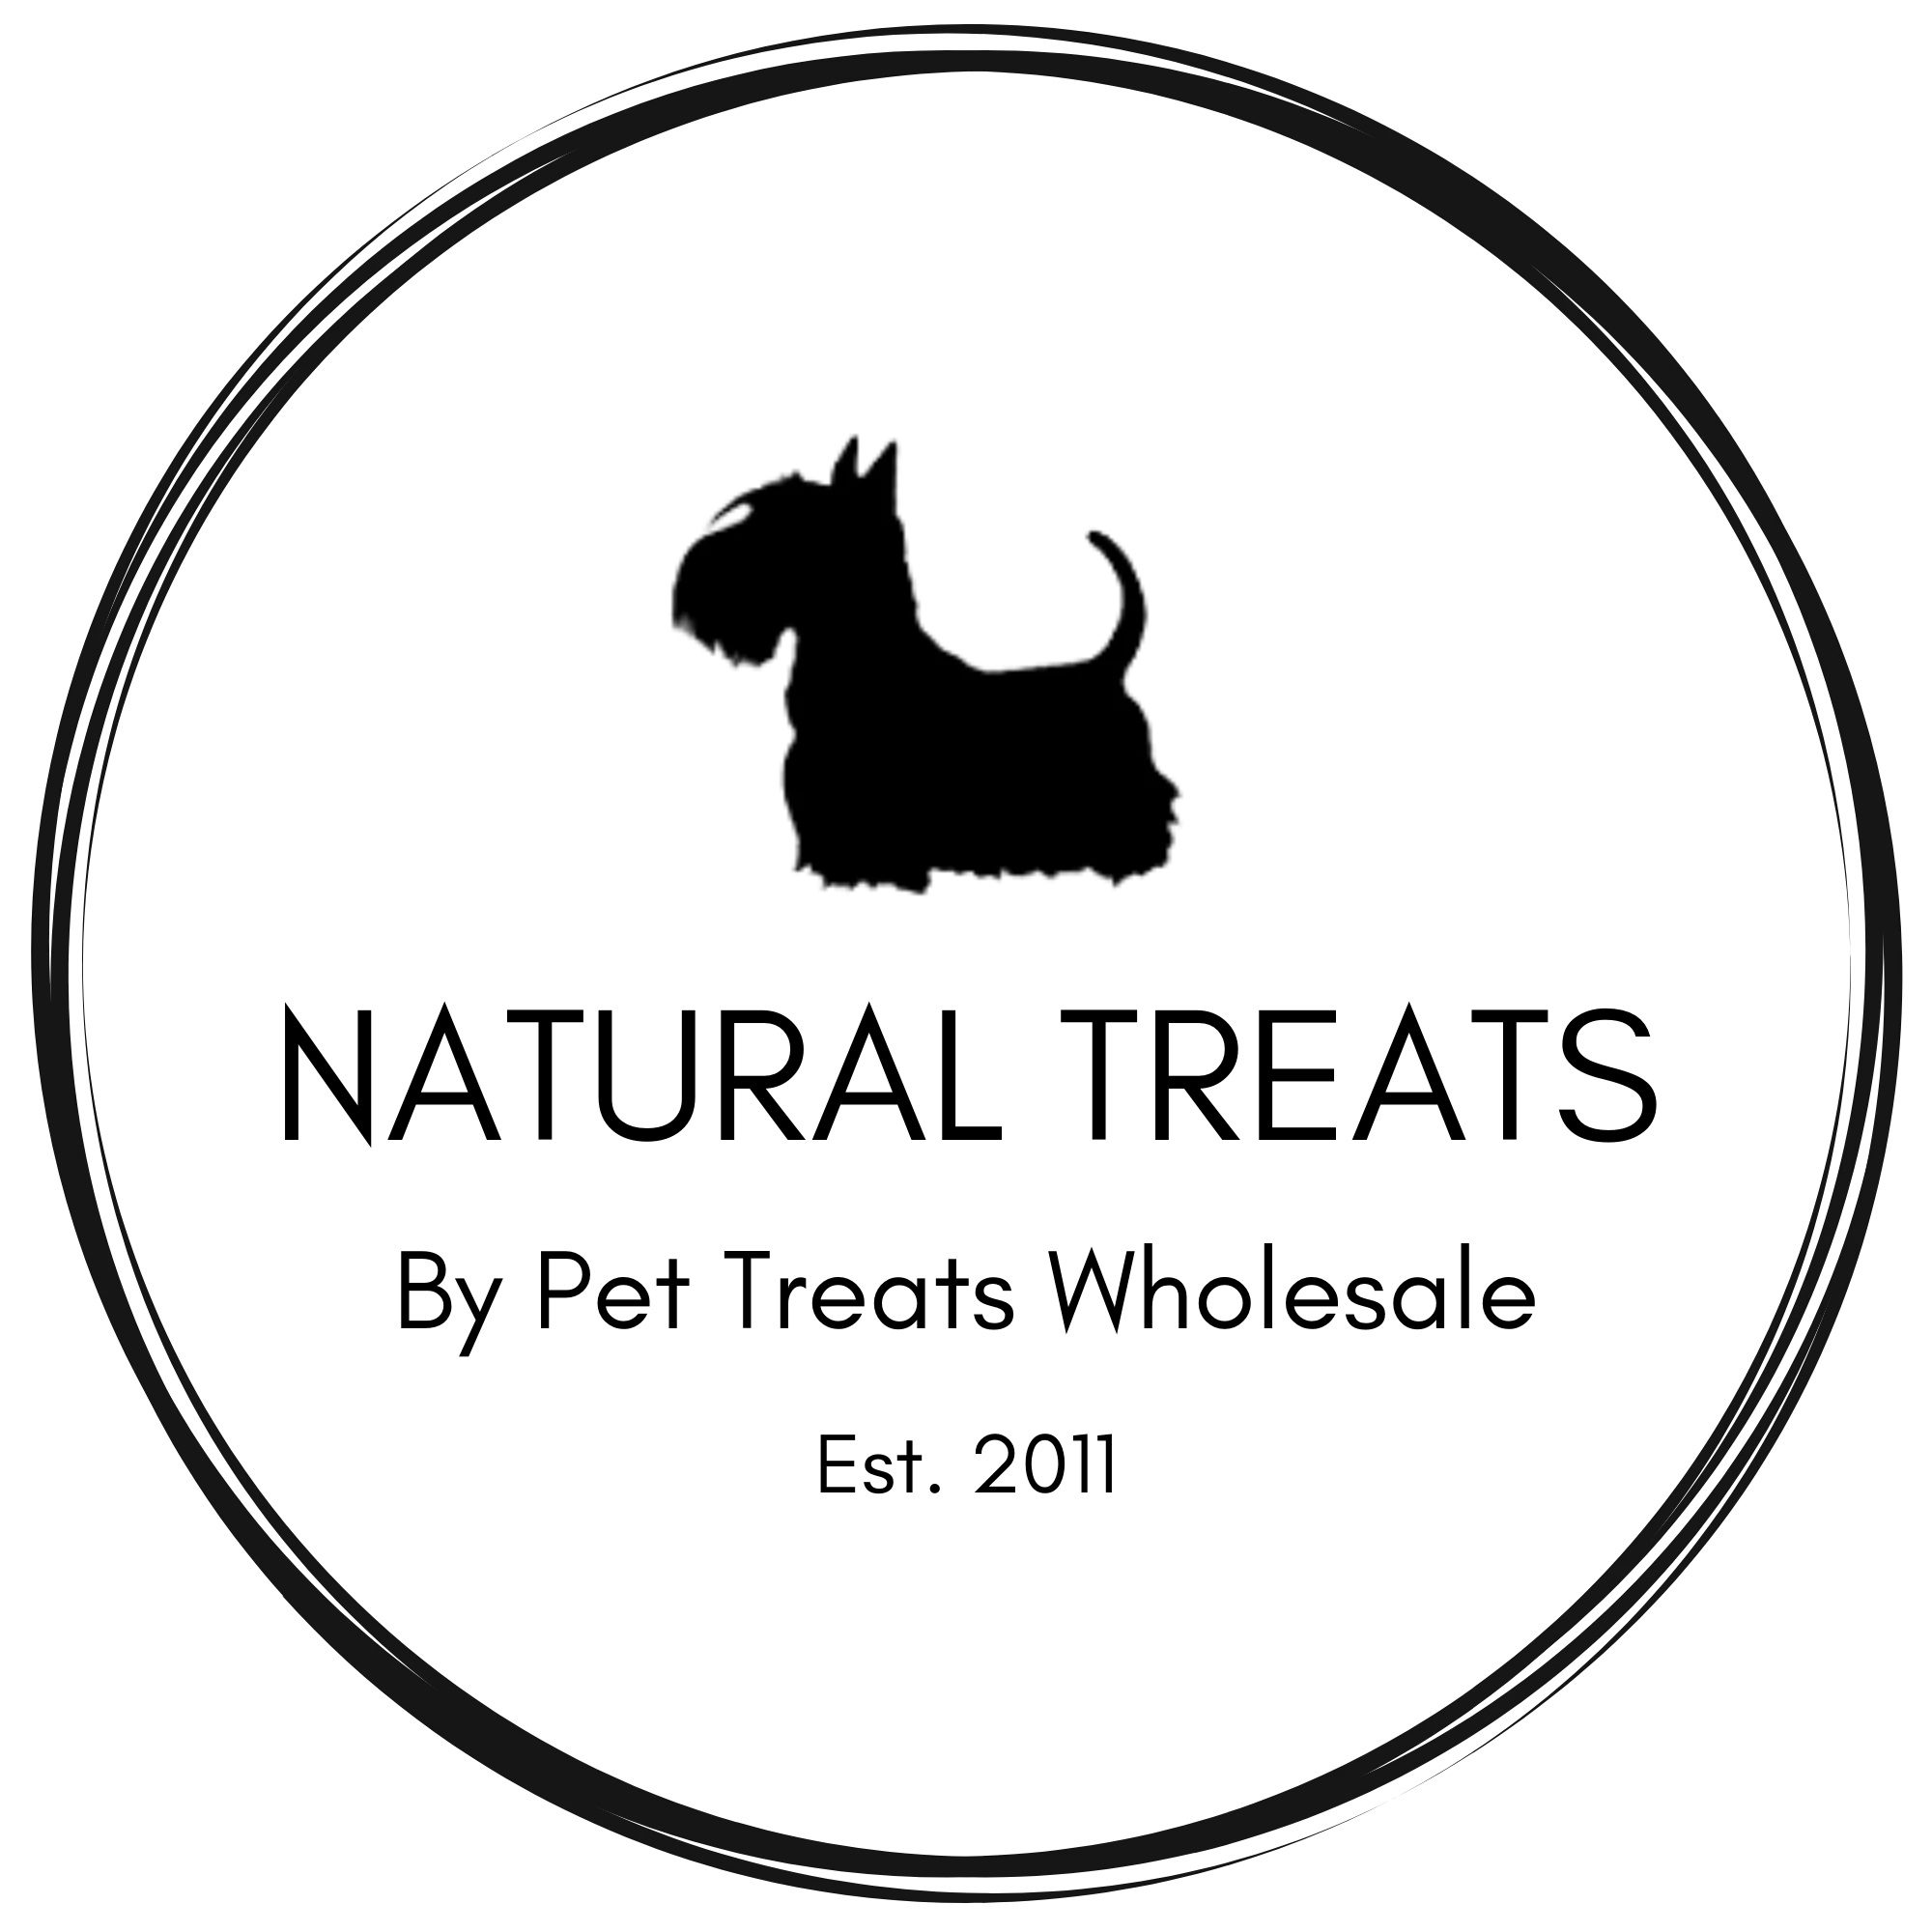 Pet Treats Wholesale Ltd